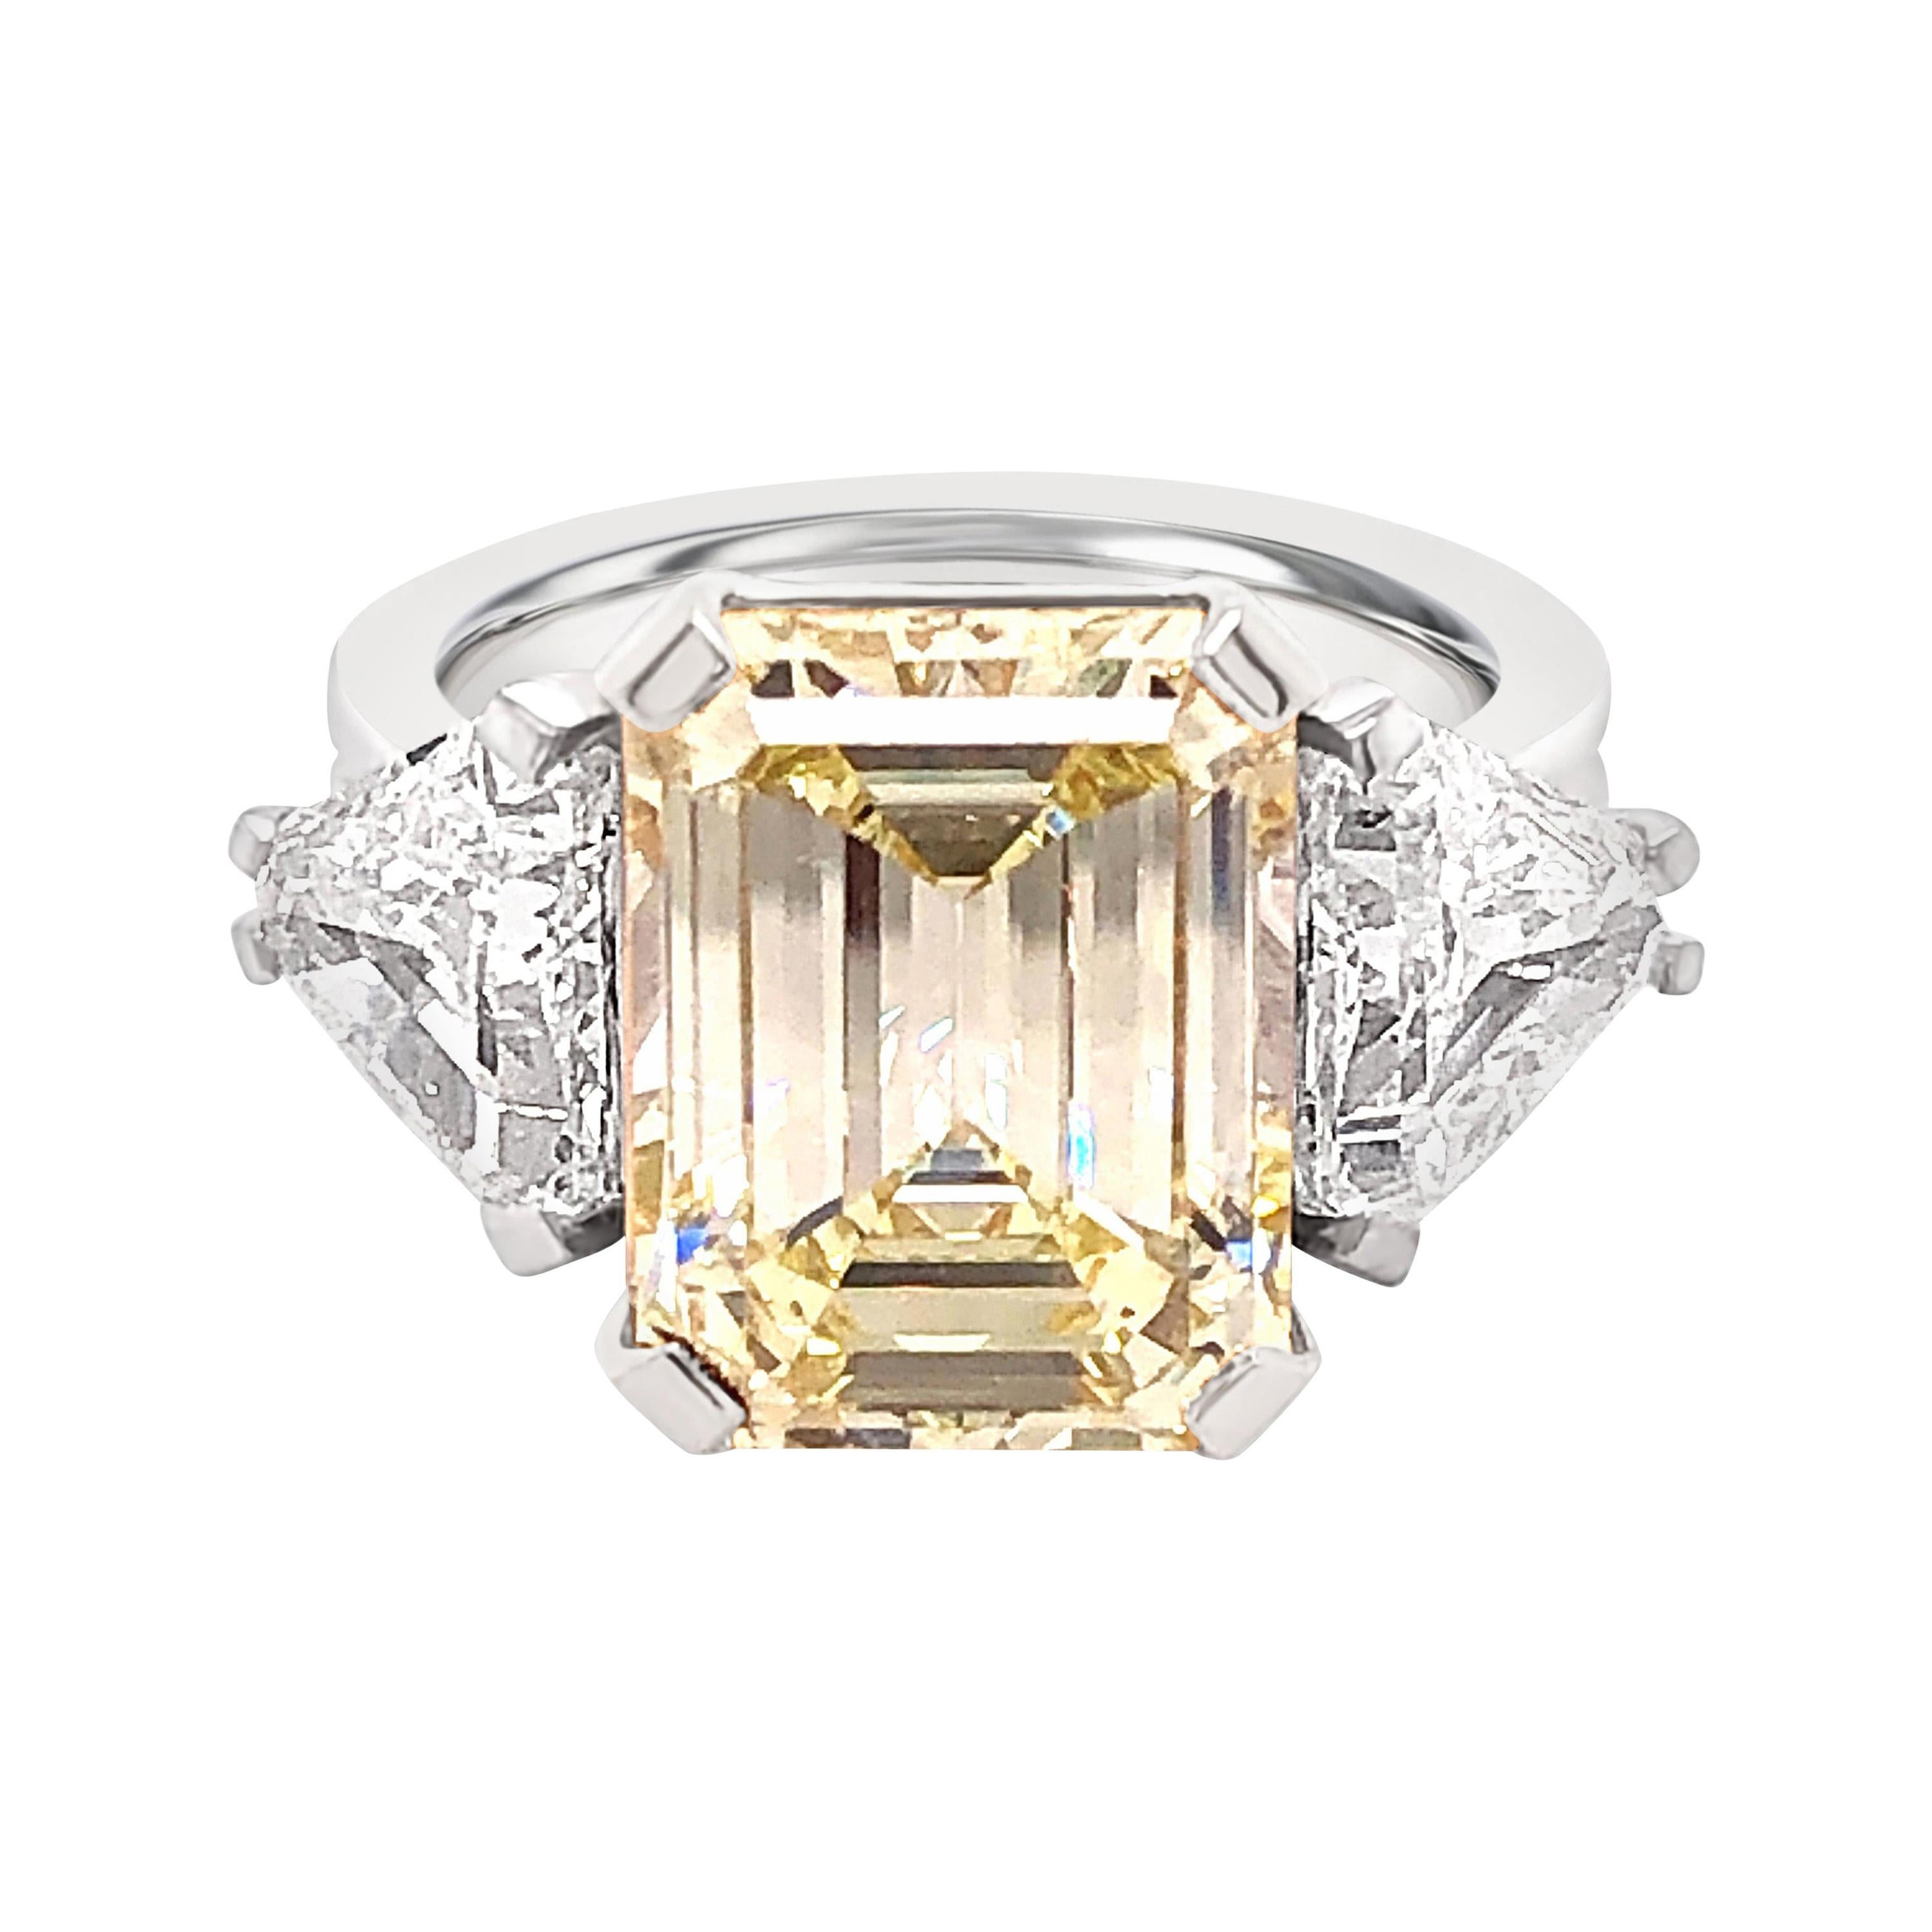 Bague Berca certifiée GIA, 5,73k diamant jaune clair 2,3k diamant blanc